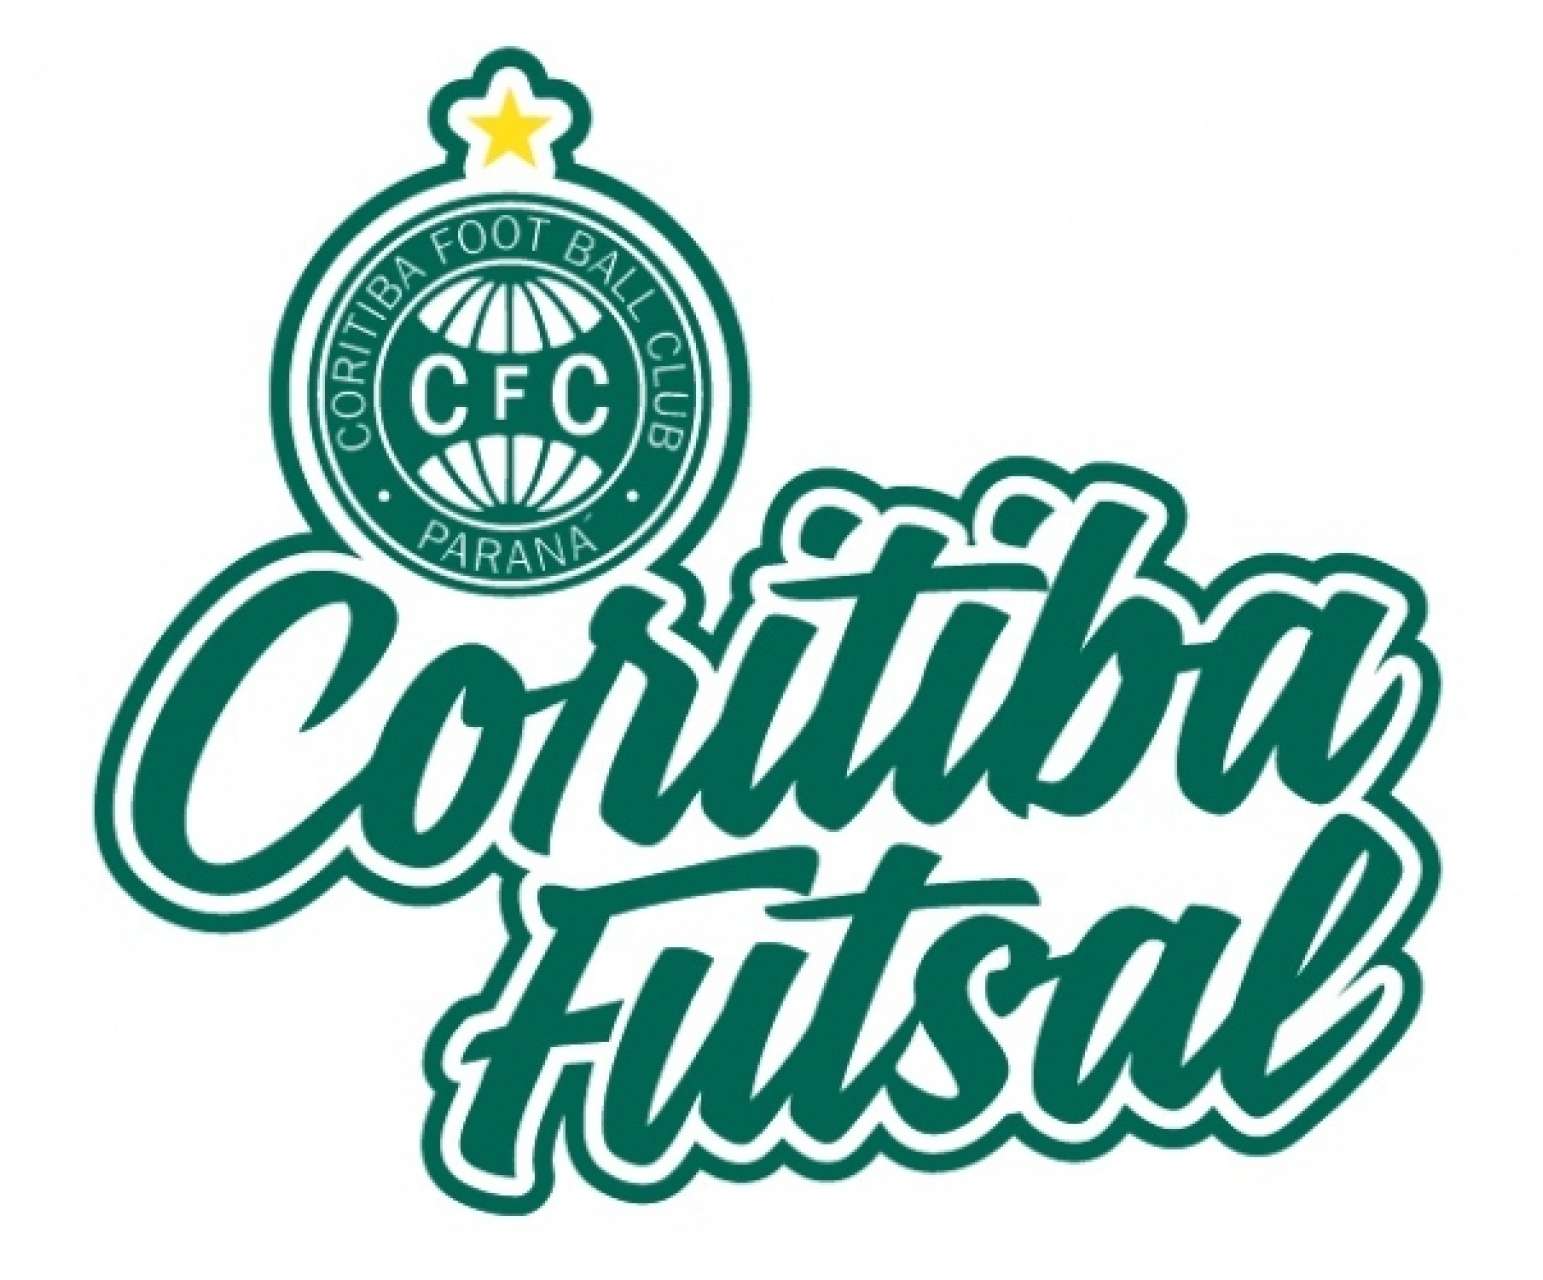 Coxa Futsal busca classificao